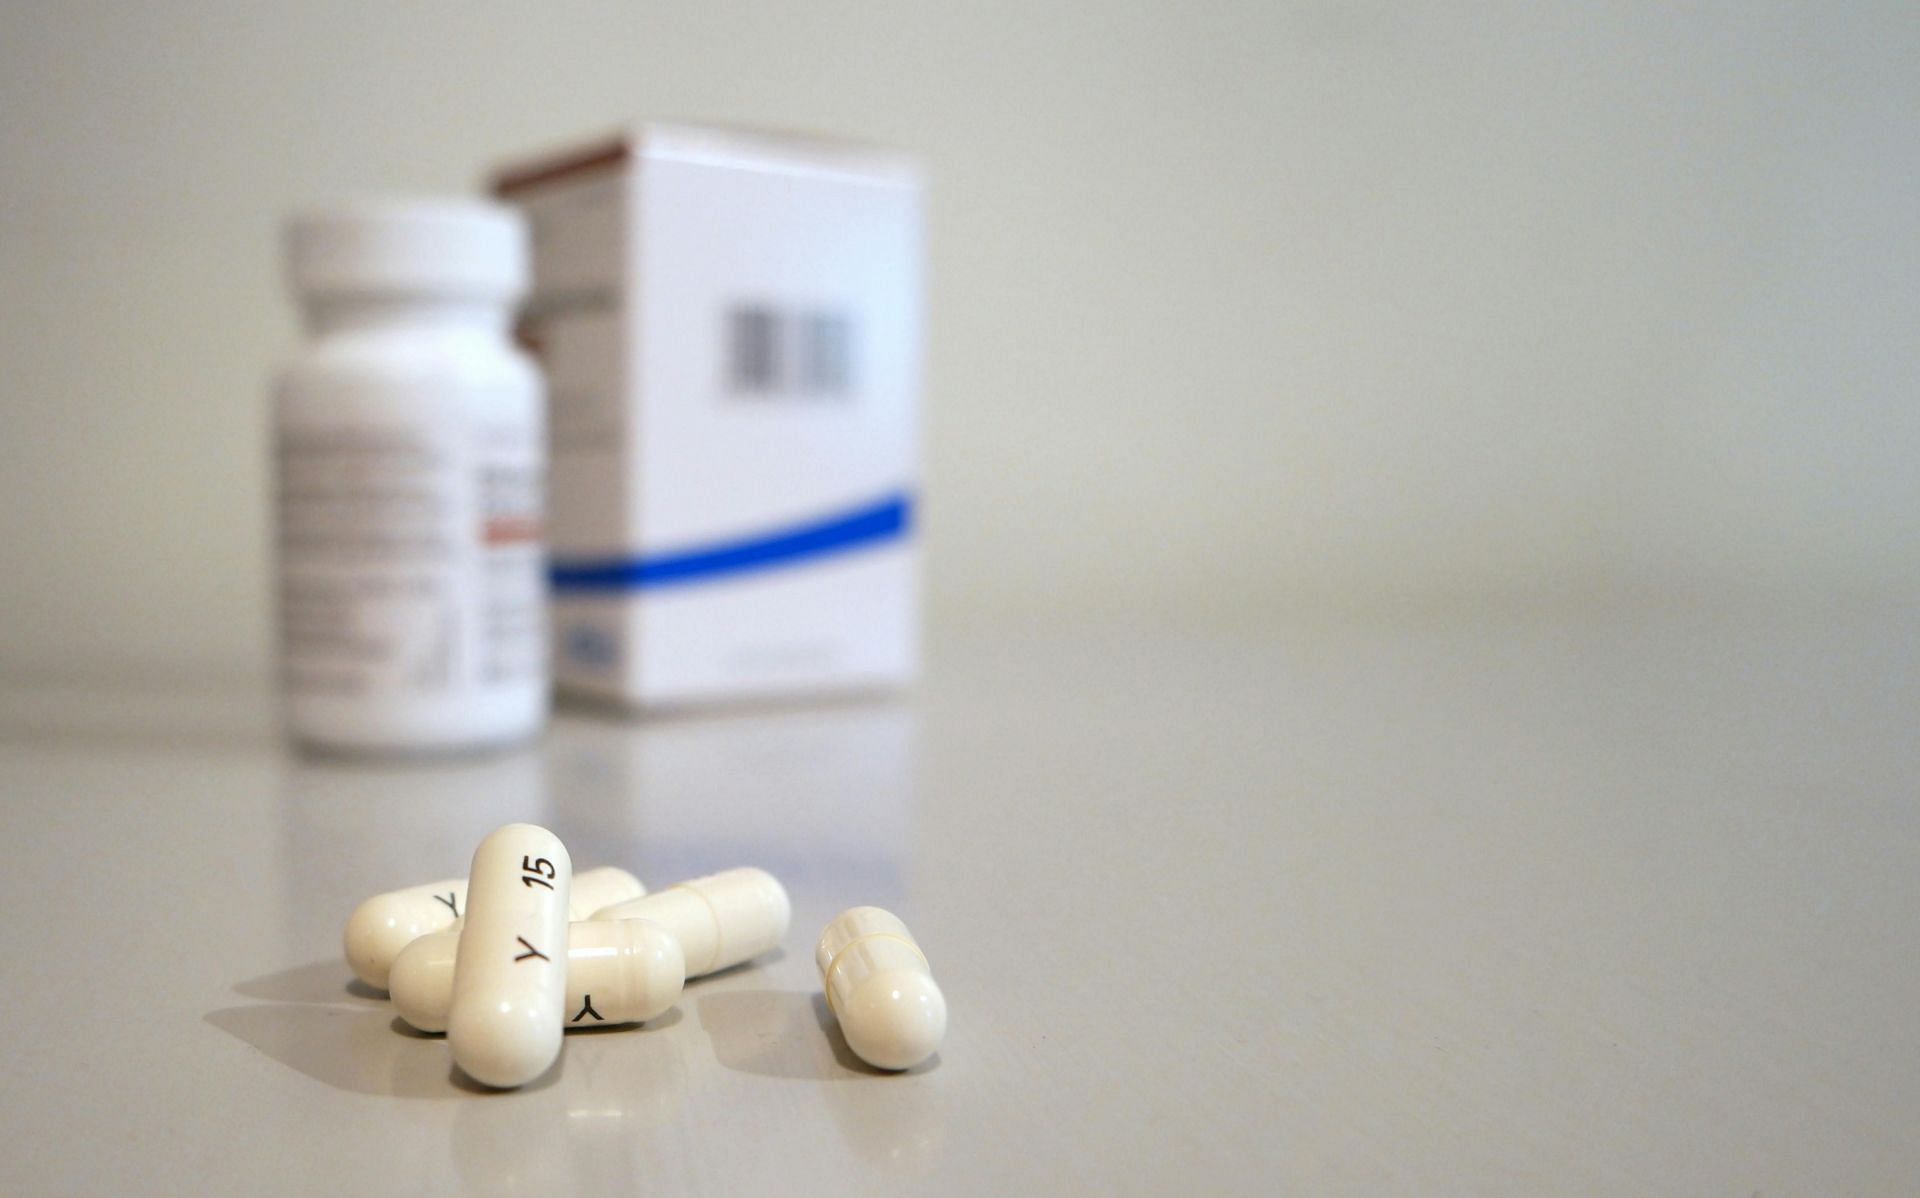 gut health supplements (image sourced via Pexels / Photo by julie)